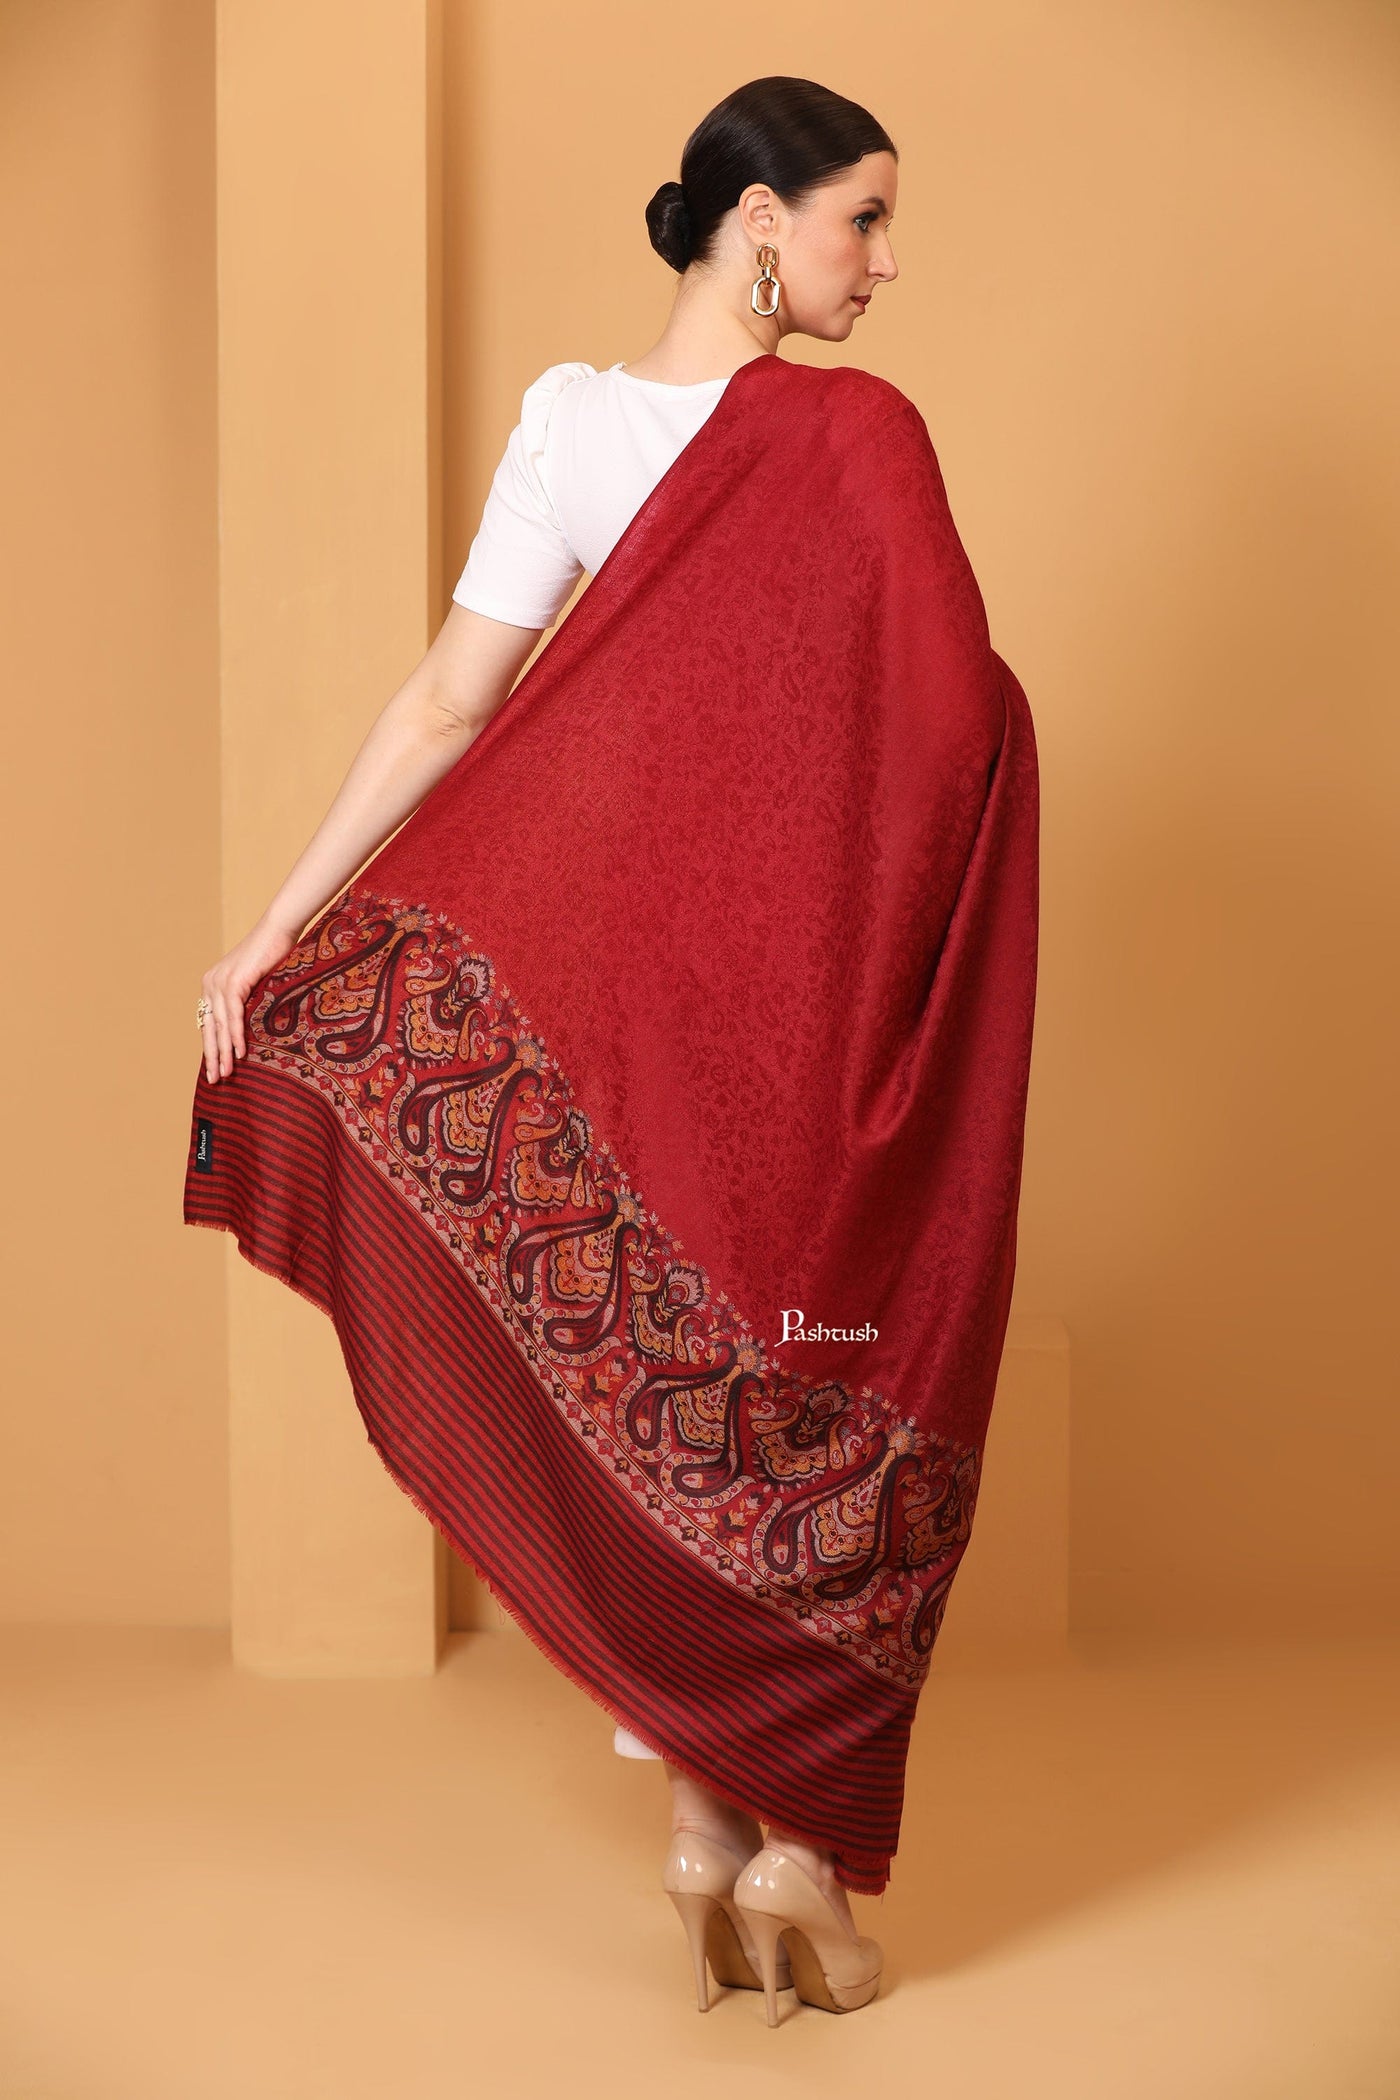 Pashtush India Womens Shawls Pashtush Womens Fine Wool Shawl, Woven Design, Ethnic Weave Palla, Crimson Maroon